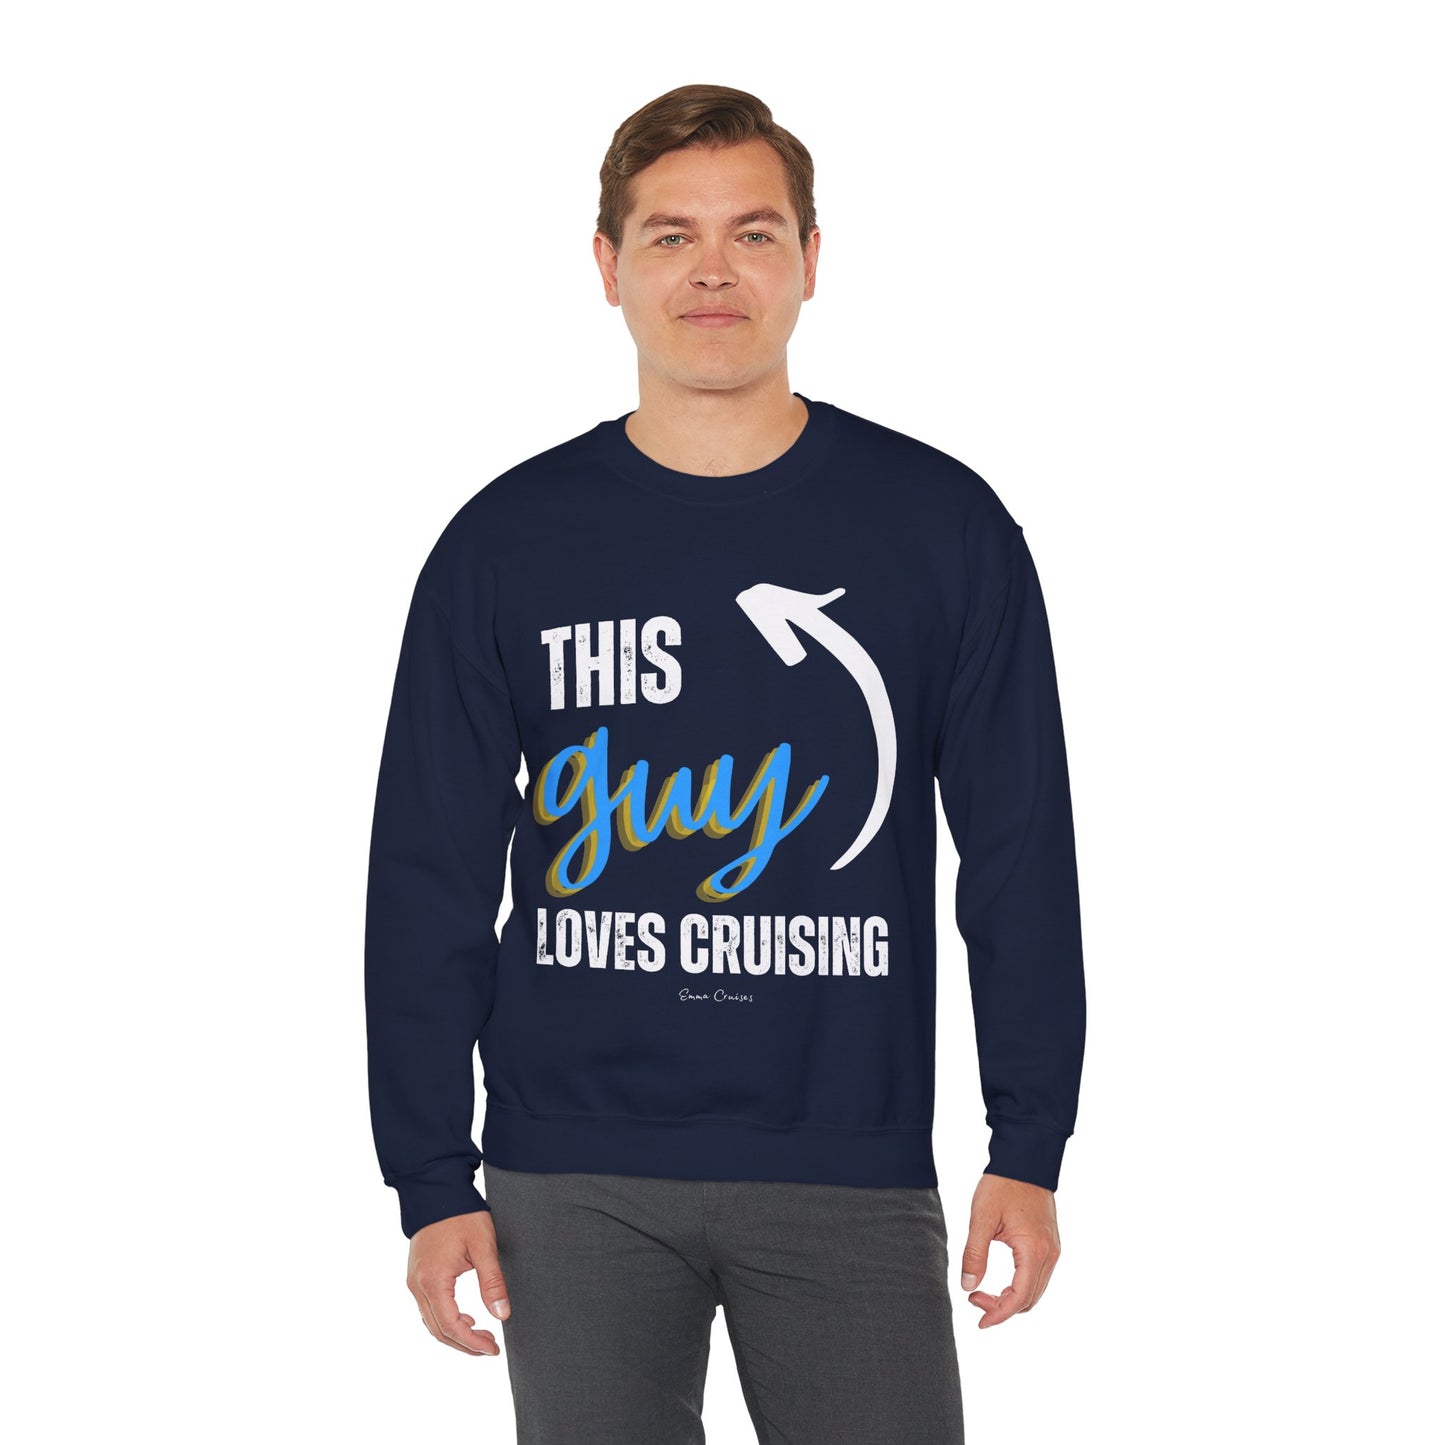 This Guy Loves Cruising - UNISEX Crewneck Sweatshirt (UK)